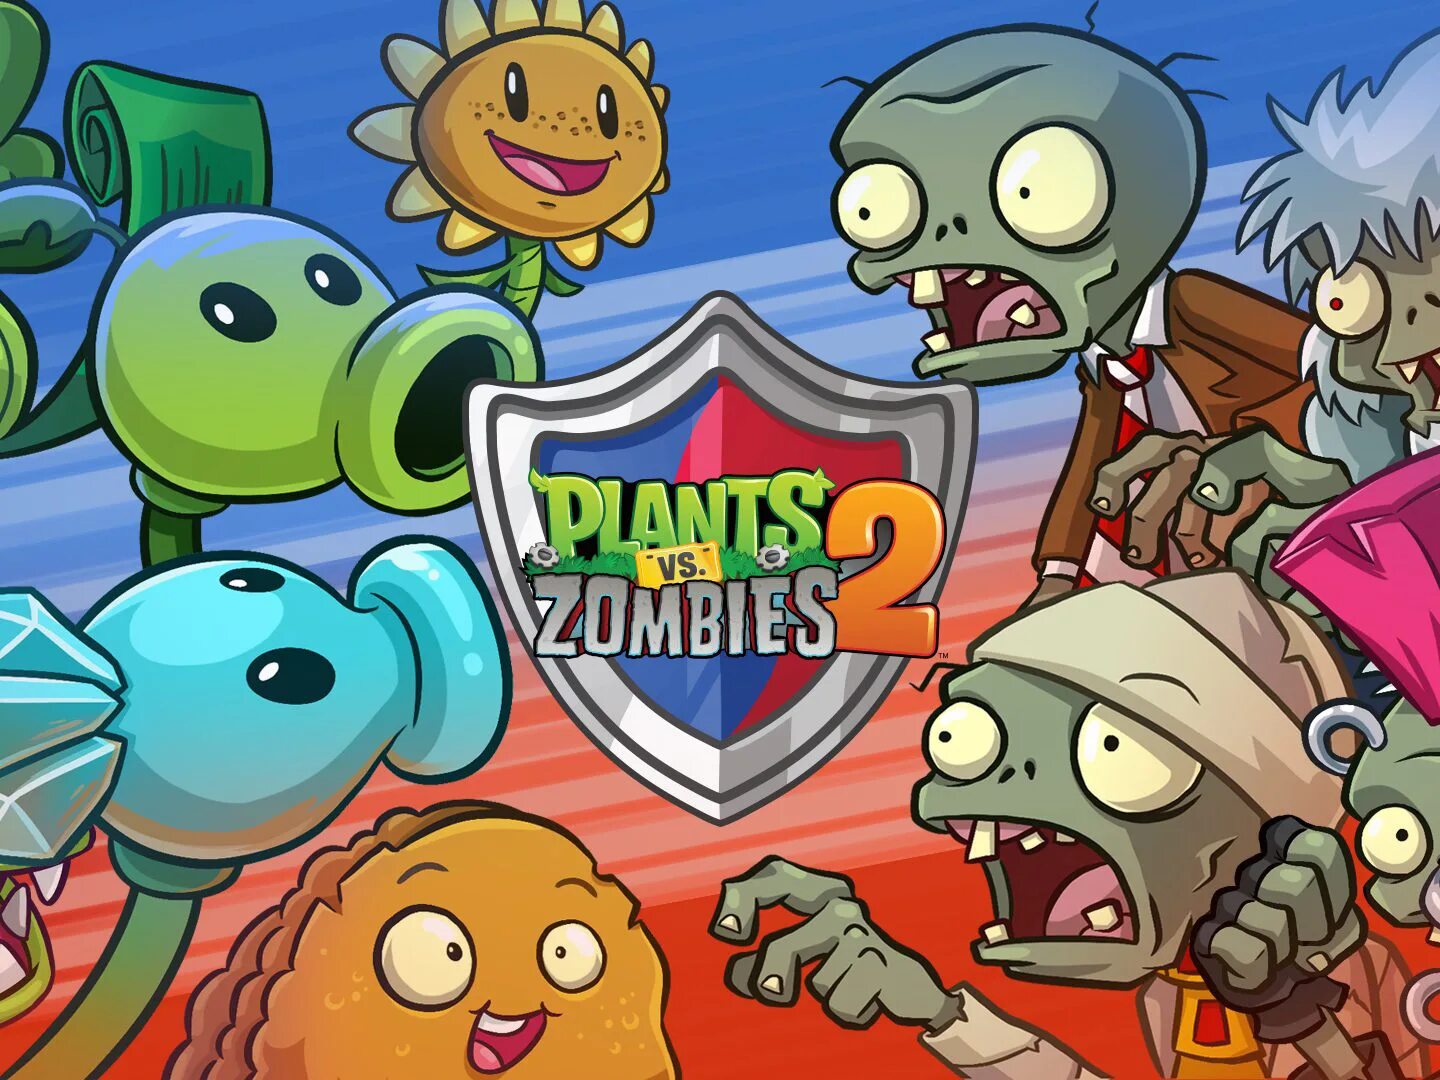 Zombis plants. ПВЗ растения против зомби 2. Растения против зомби 2 часть #2. Plants vs Zombies 1 зомби. Растения против зомби 2 зомби.